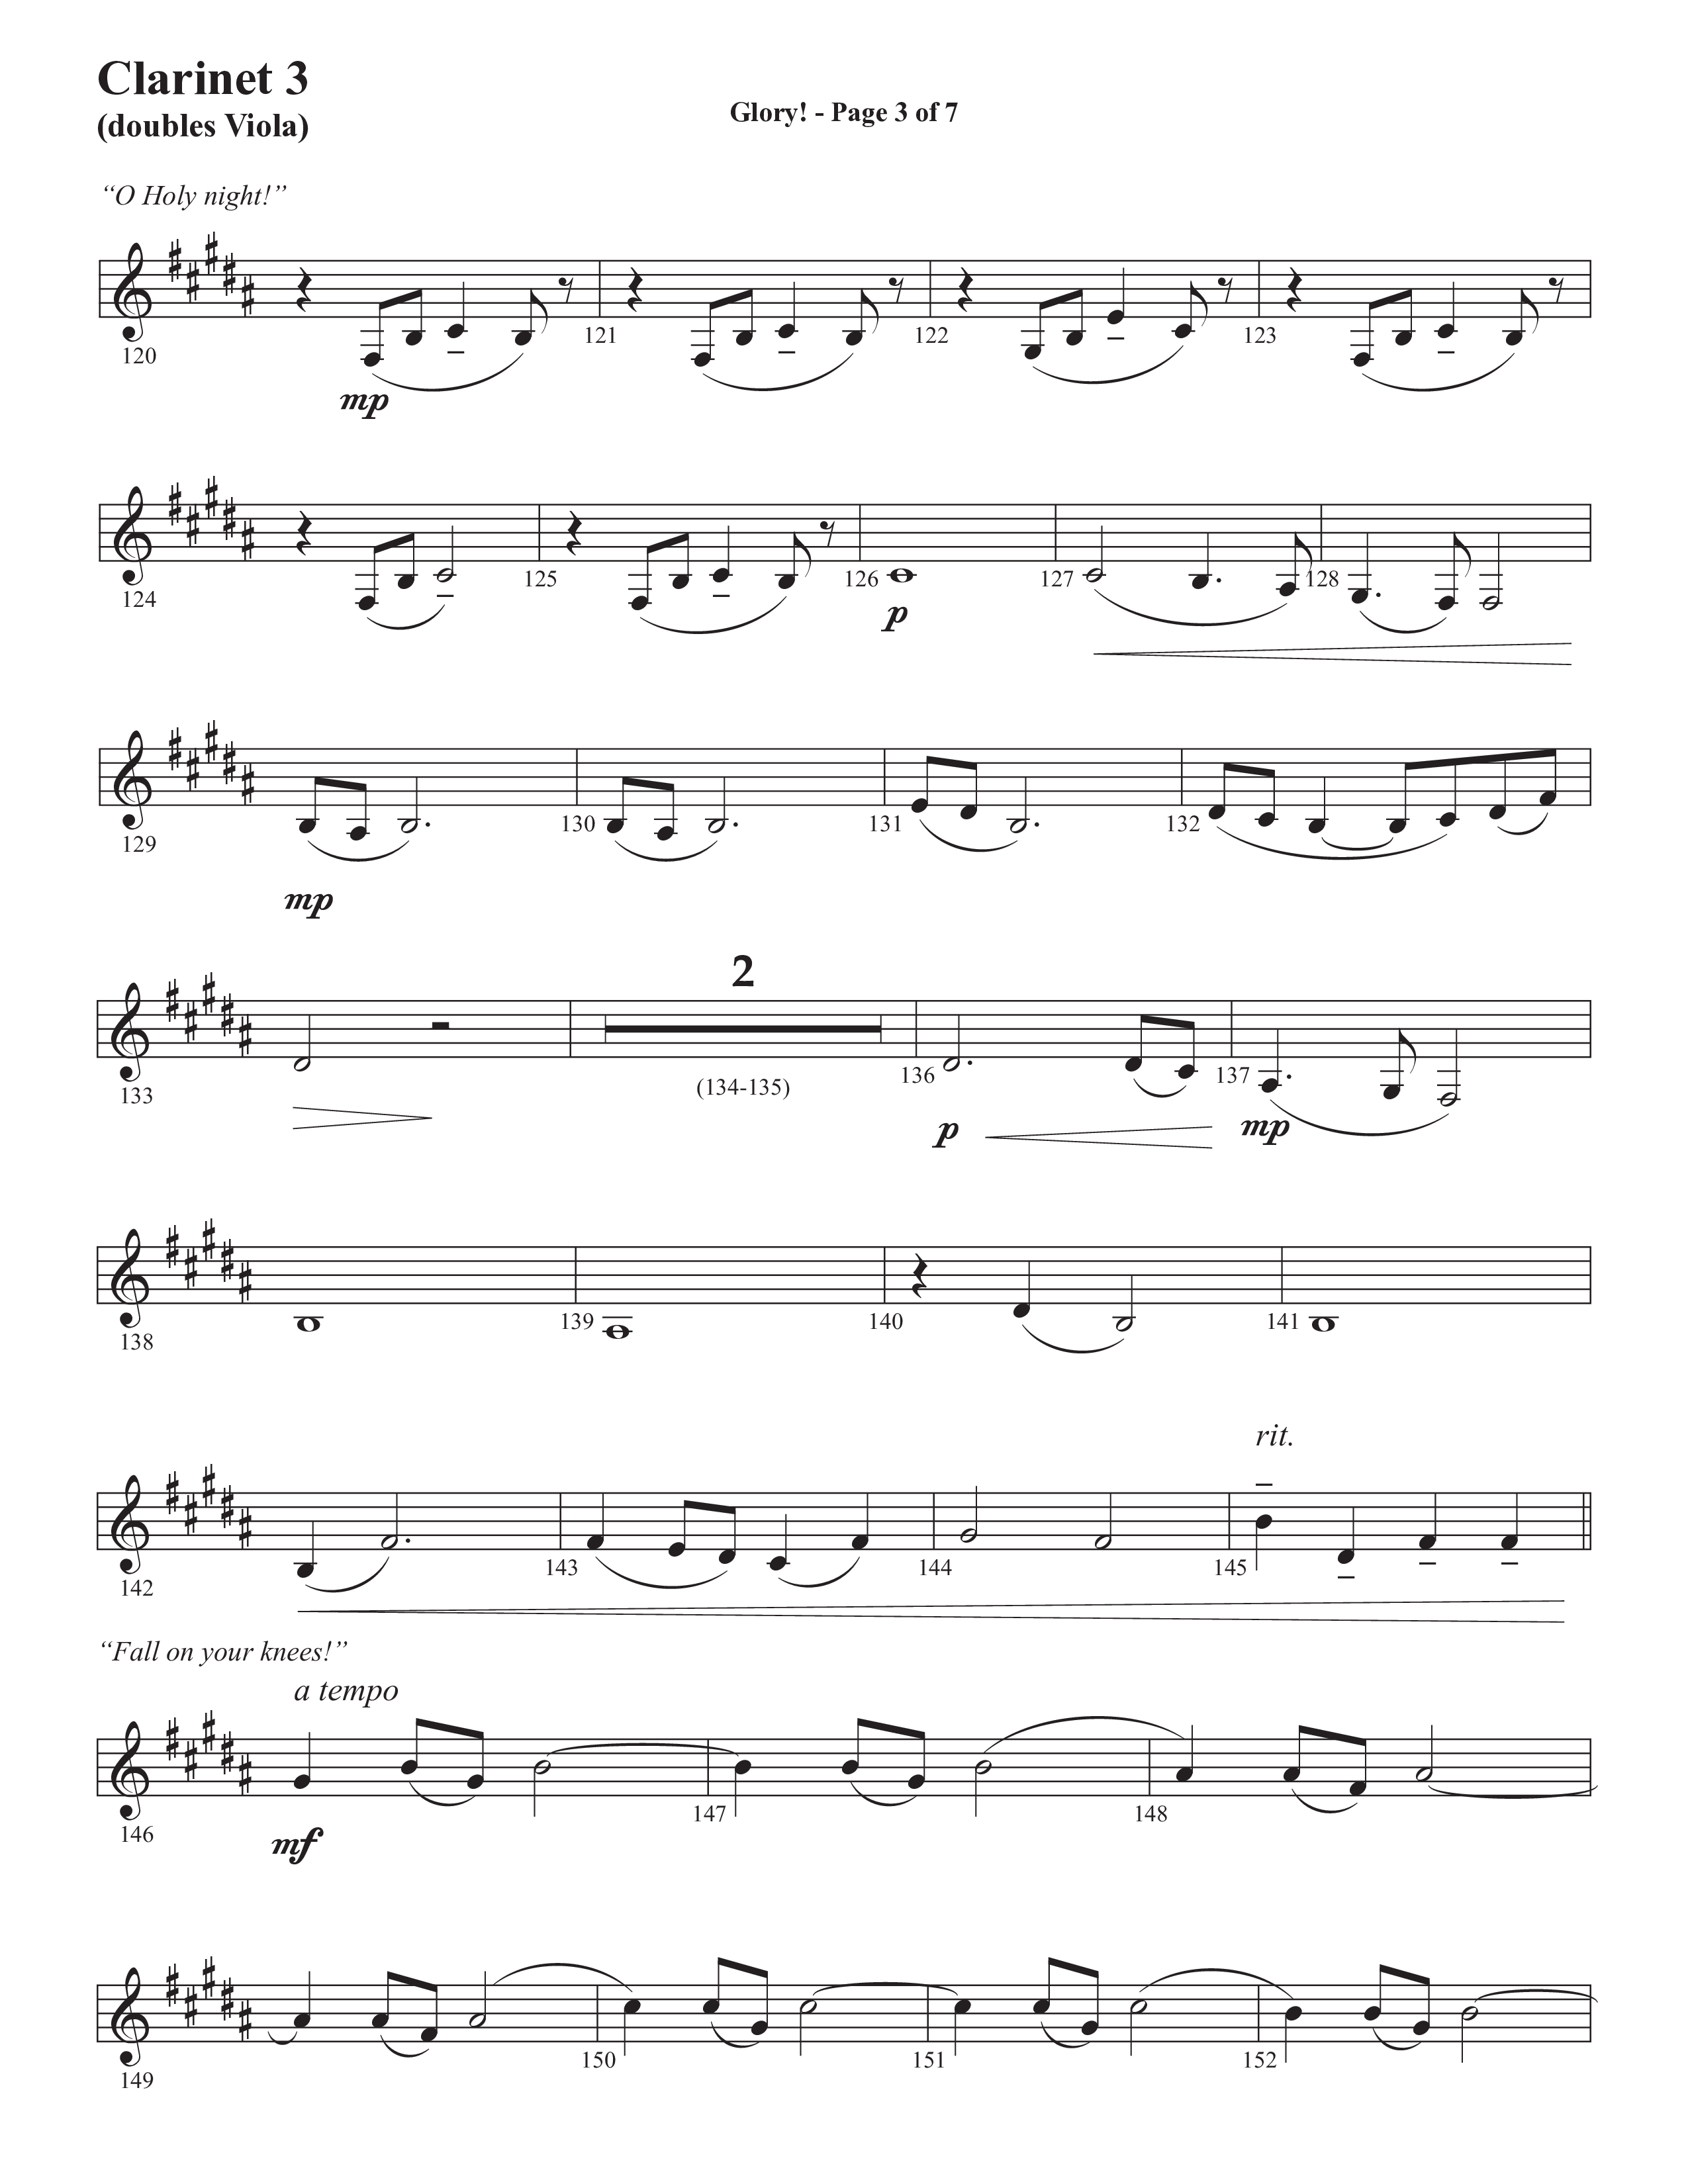 Glory: A Christmas Worship Experience (Choral Anthem SATB) Clarinet 3 (Semsen Music / Arr. John Bolin / Orch. Cliff Duren)